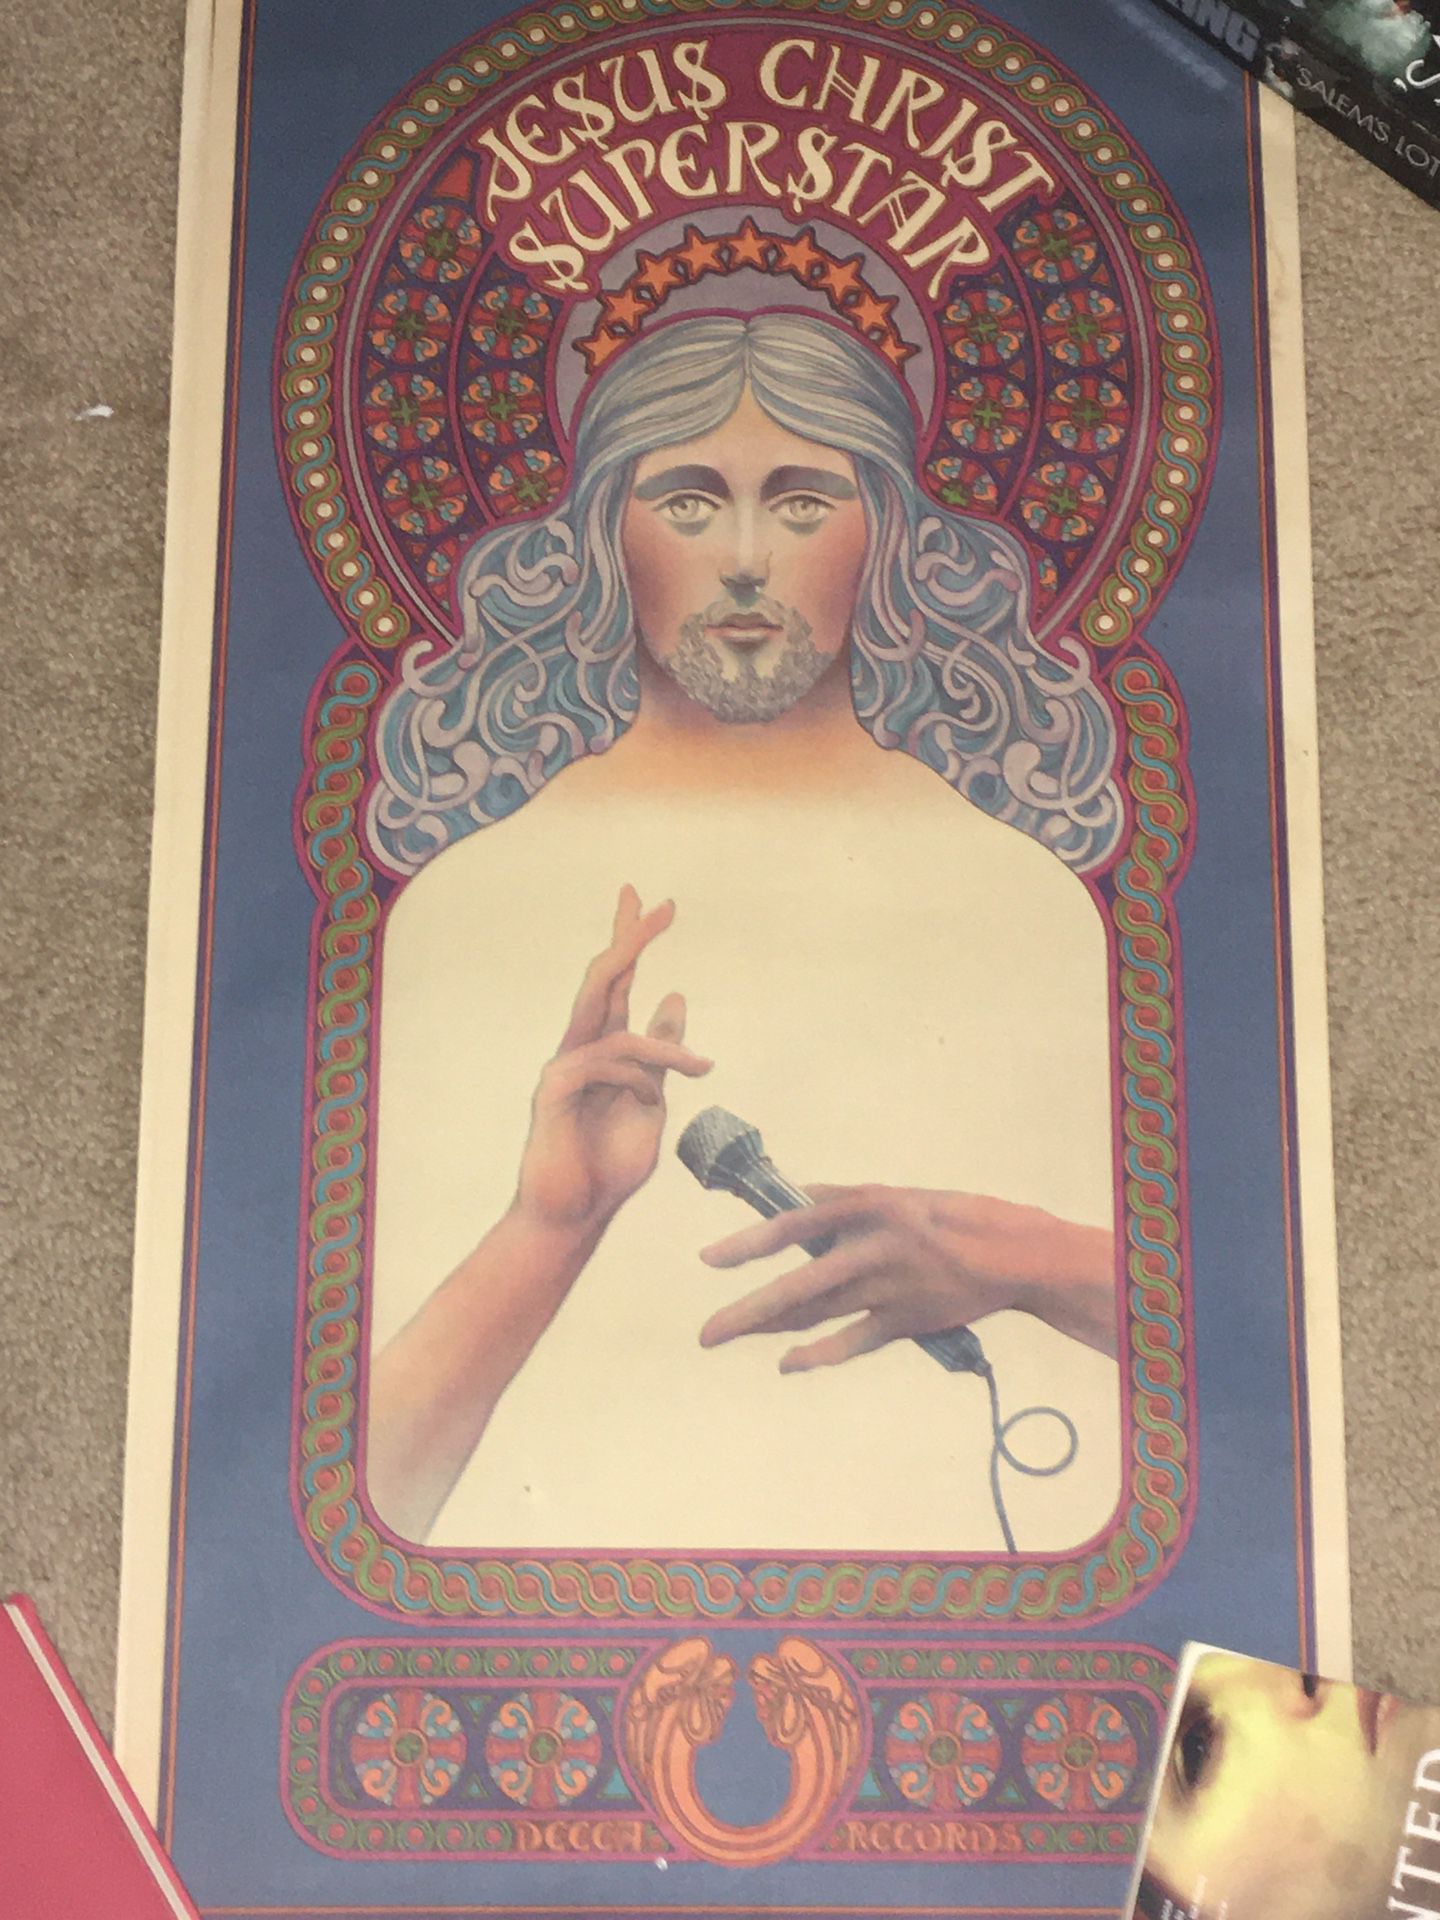 Vintage Poster - Jesus Christ Superstar  Playbill  Andrew Lloyd Webber Rock Opera 1970’s Broadway Production